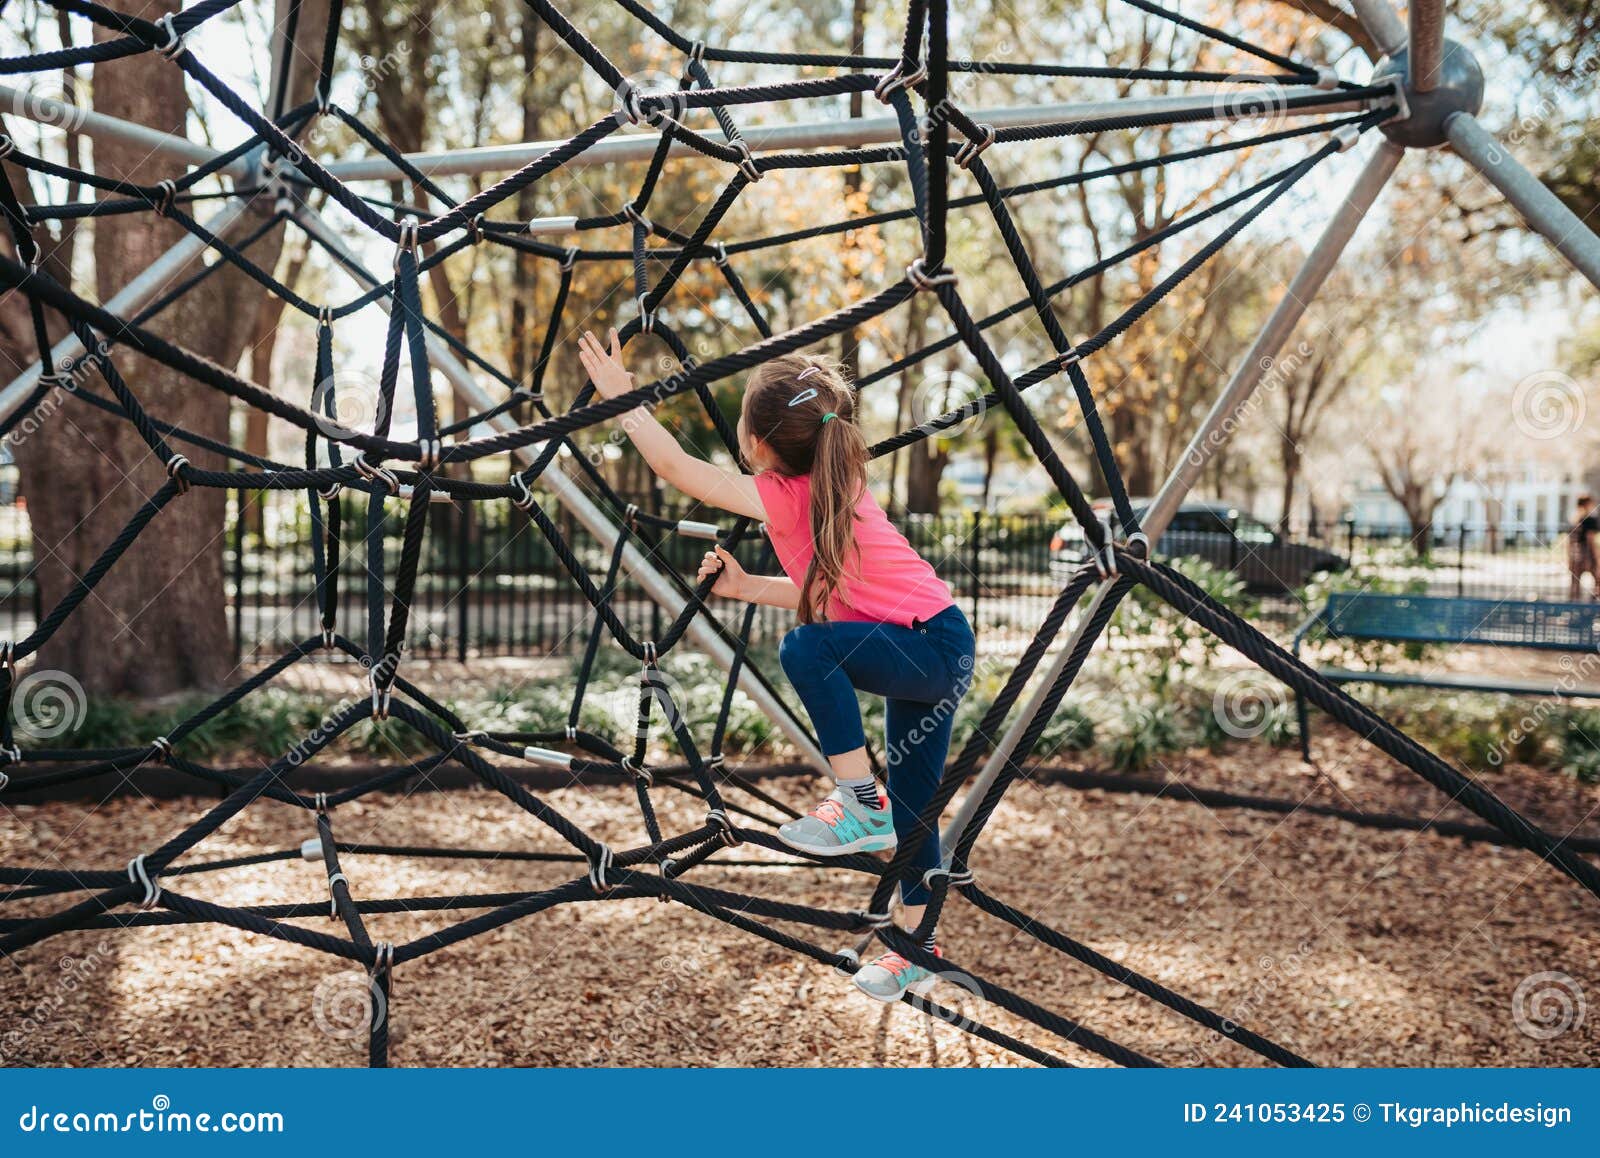 Child at Playground. Little Girl on a Playground Climbing Net